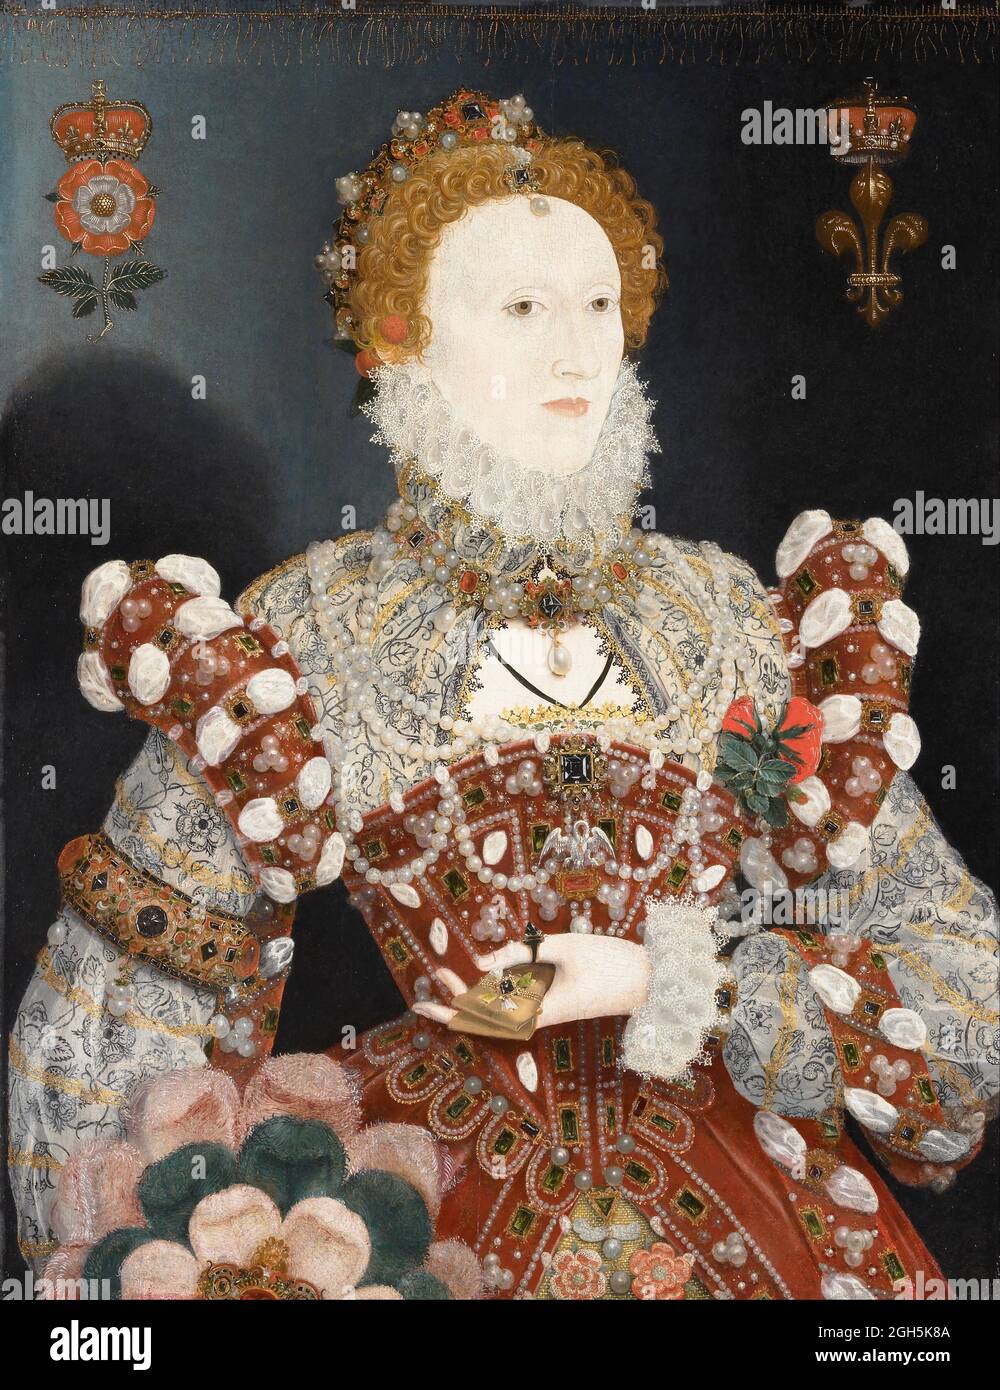 Un retrato de Nicholas Hilliard de la Reina Isabel I, que era Reina de Inglaterra desde 1558 hasta 1603 Foto de stock